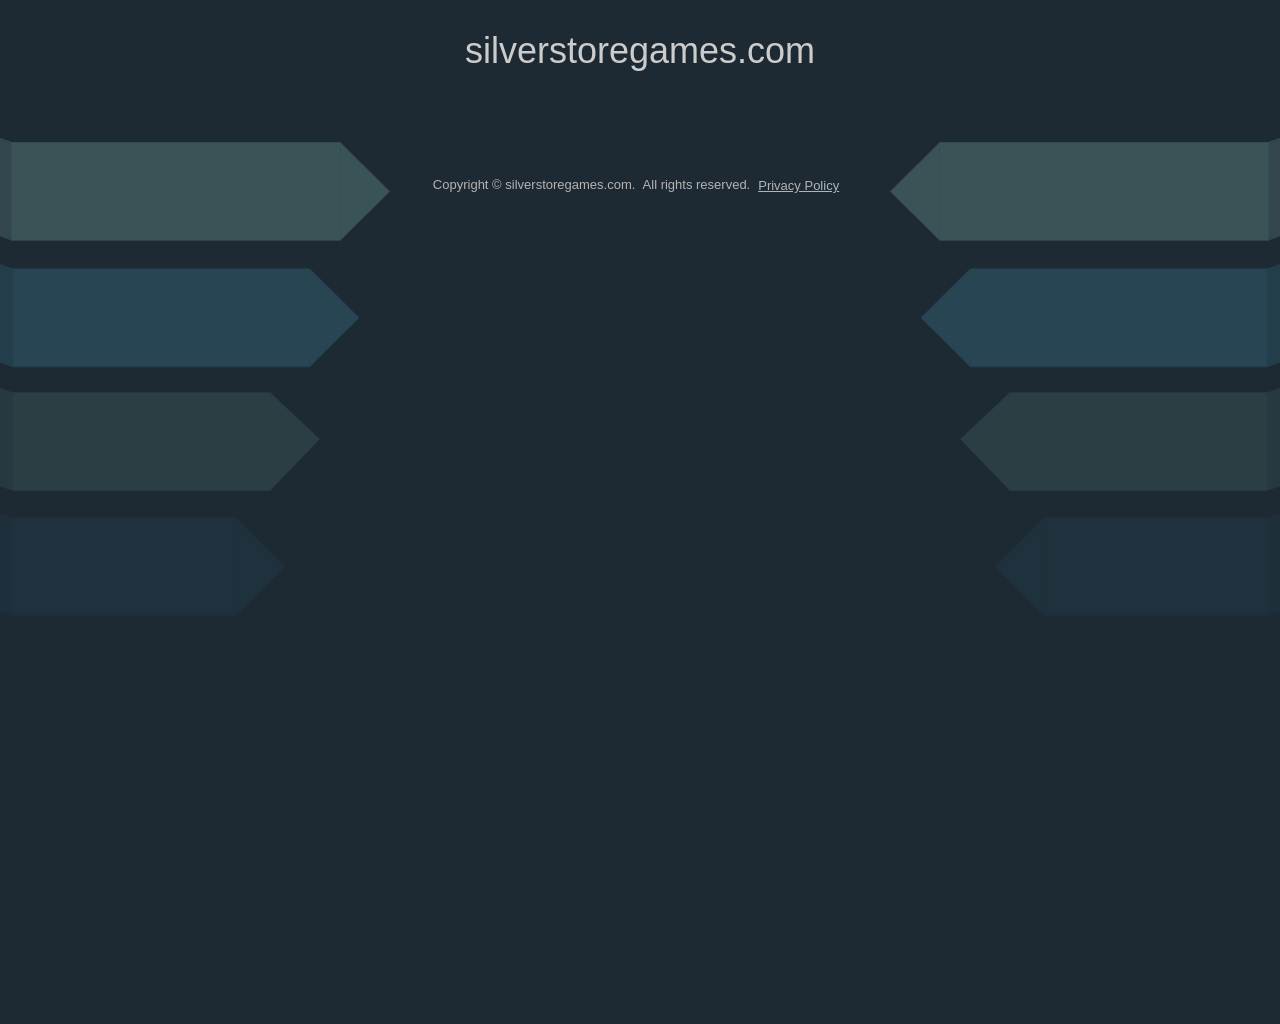 silverstoregames.com